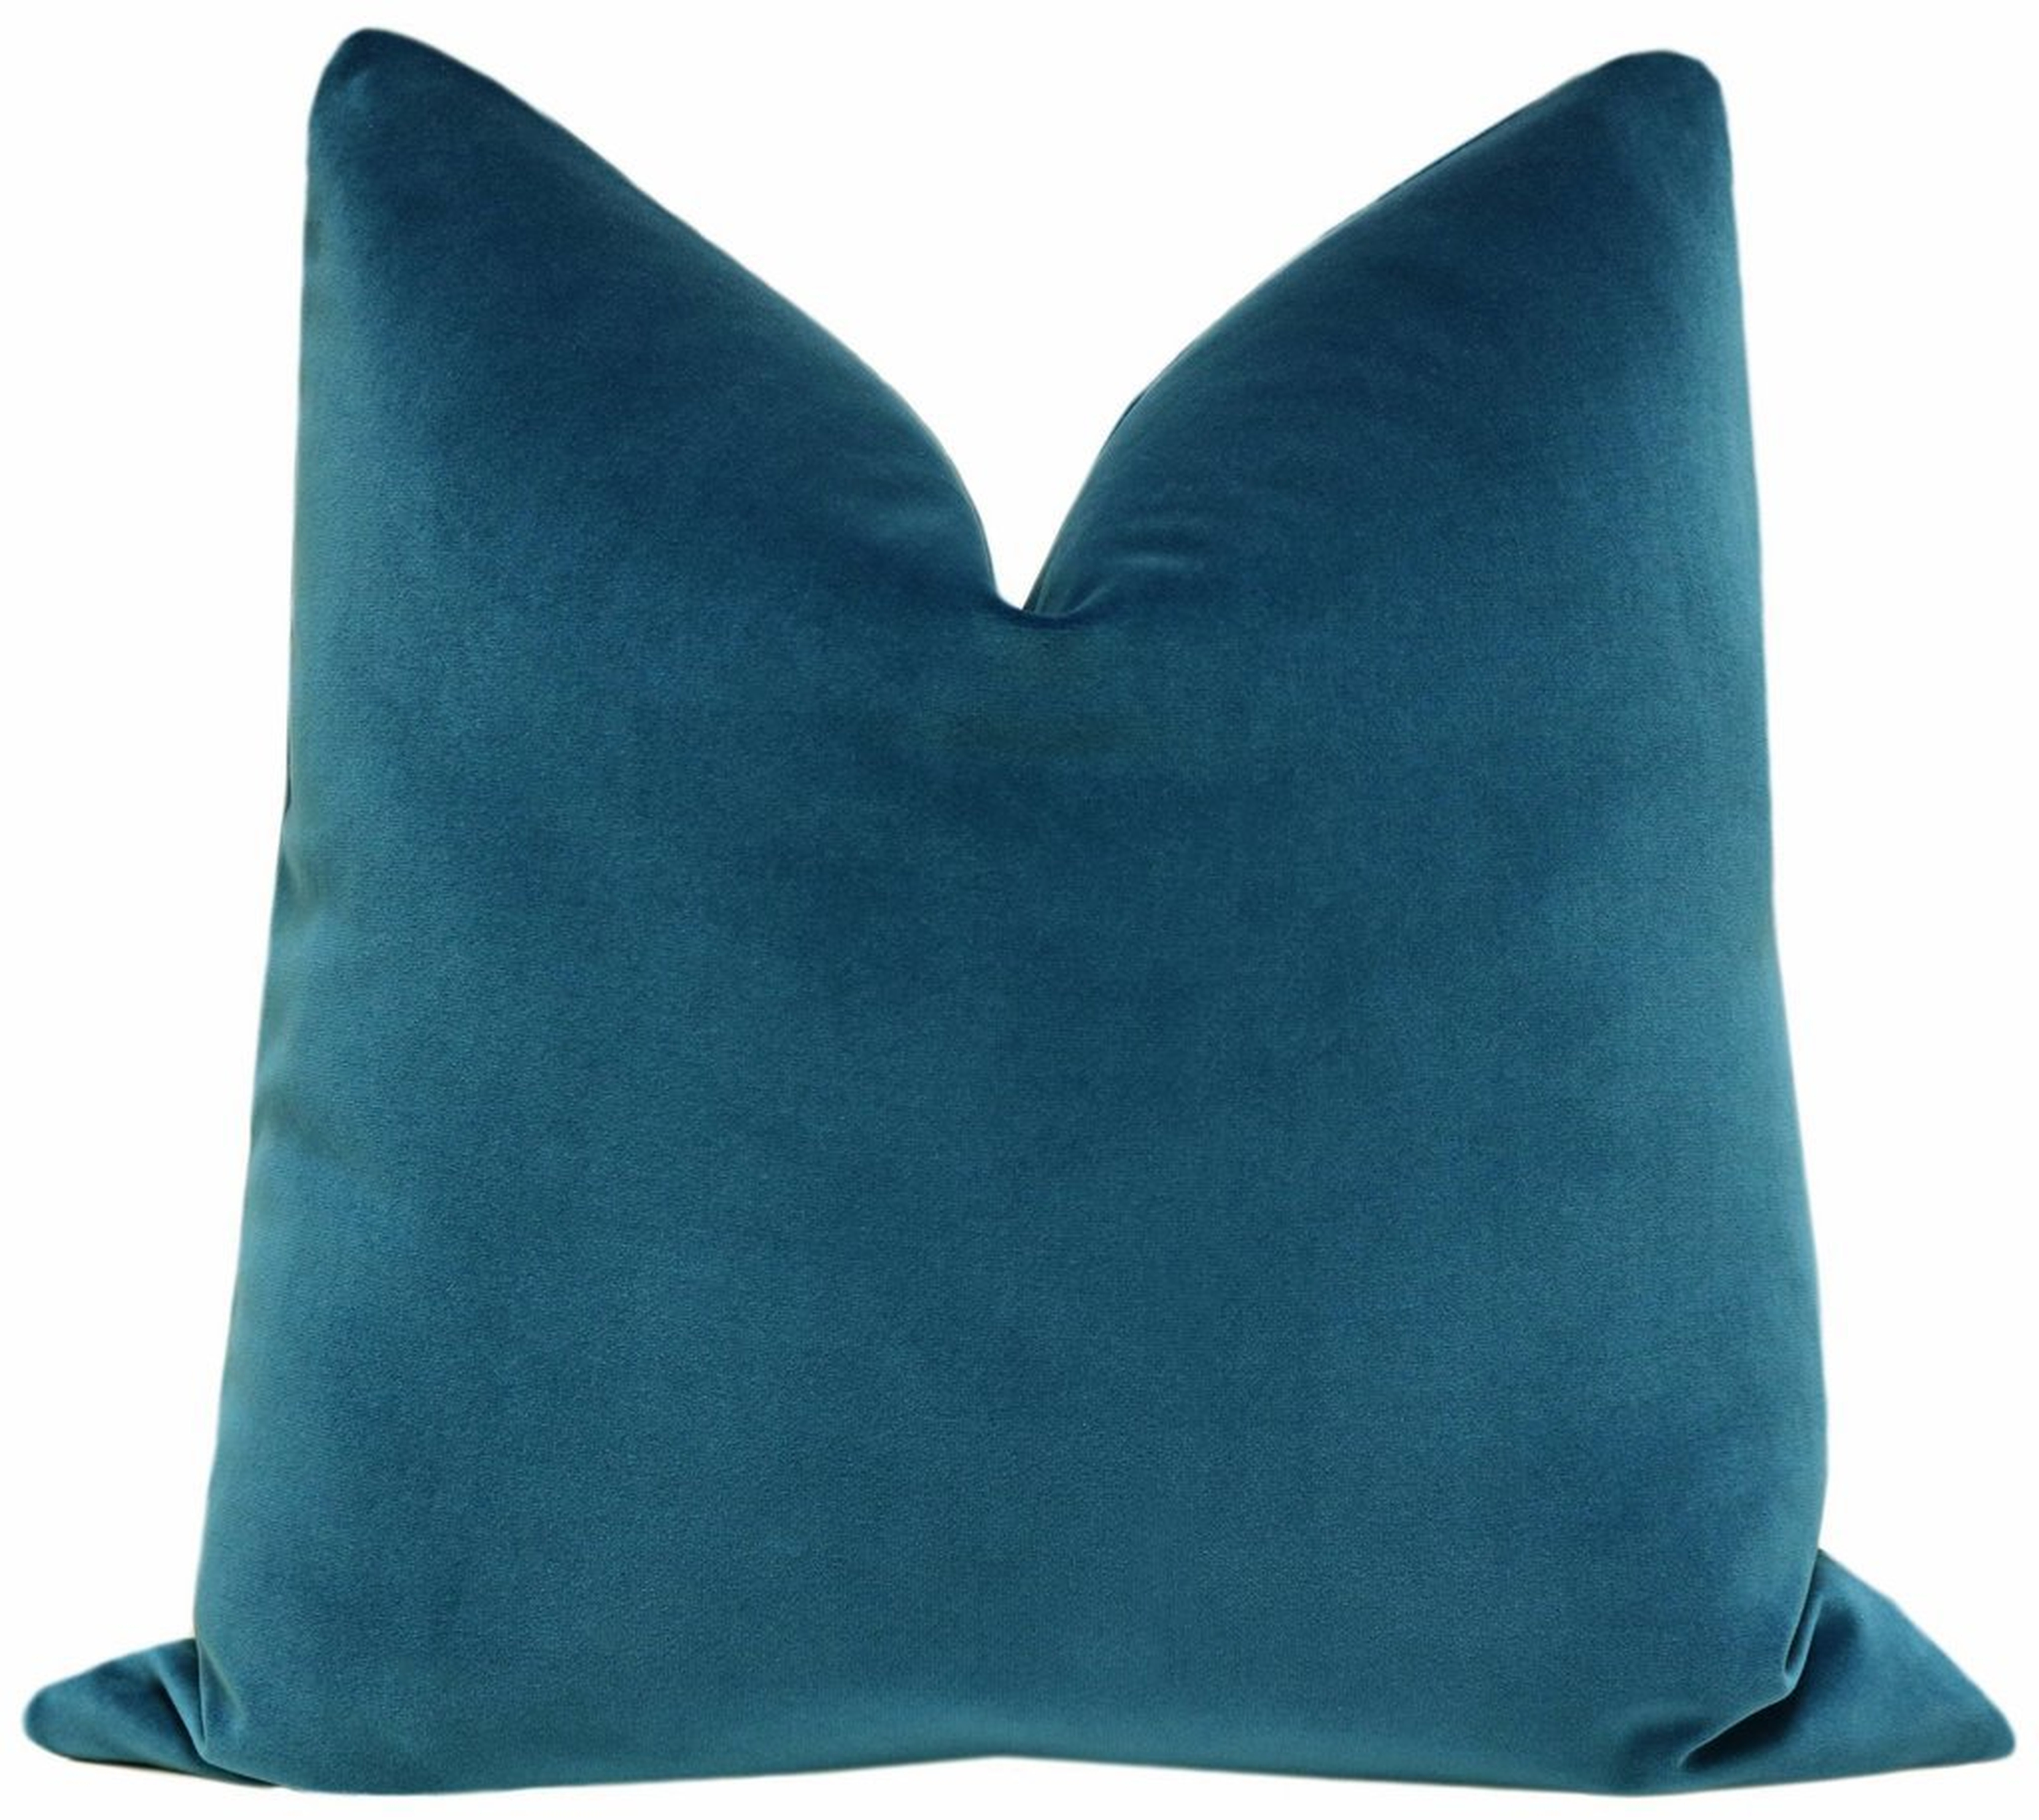 Signature Velvet // Baltic Blue, 20" Pillow Cover - Little Design Company